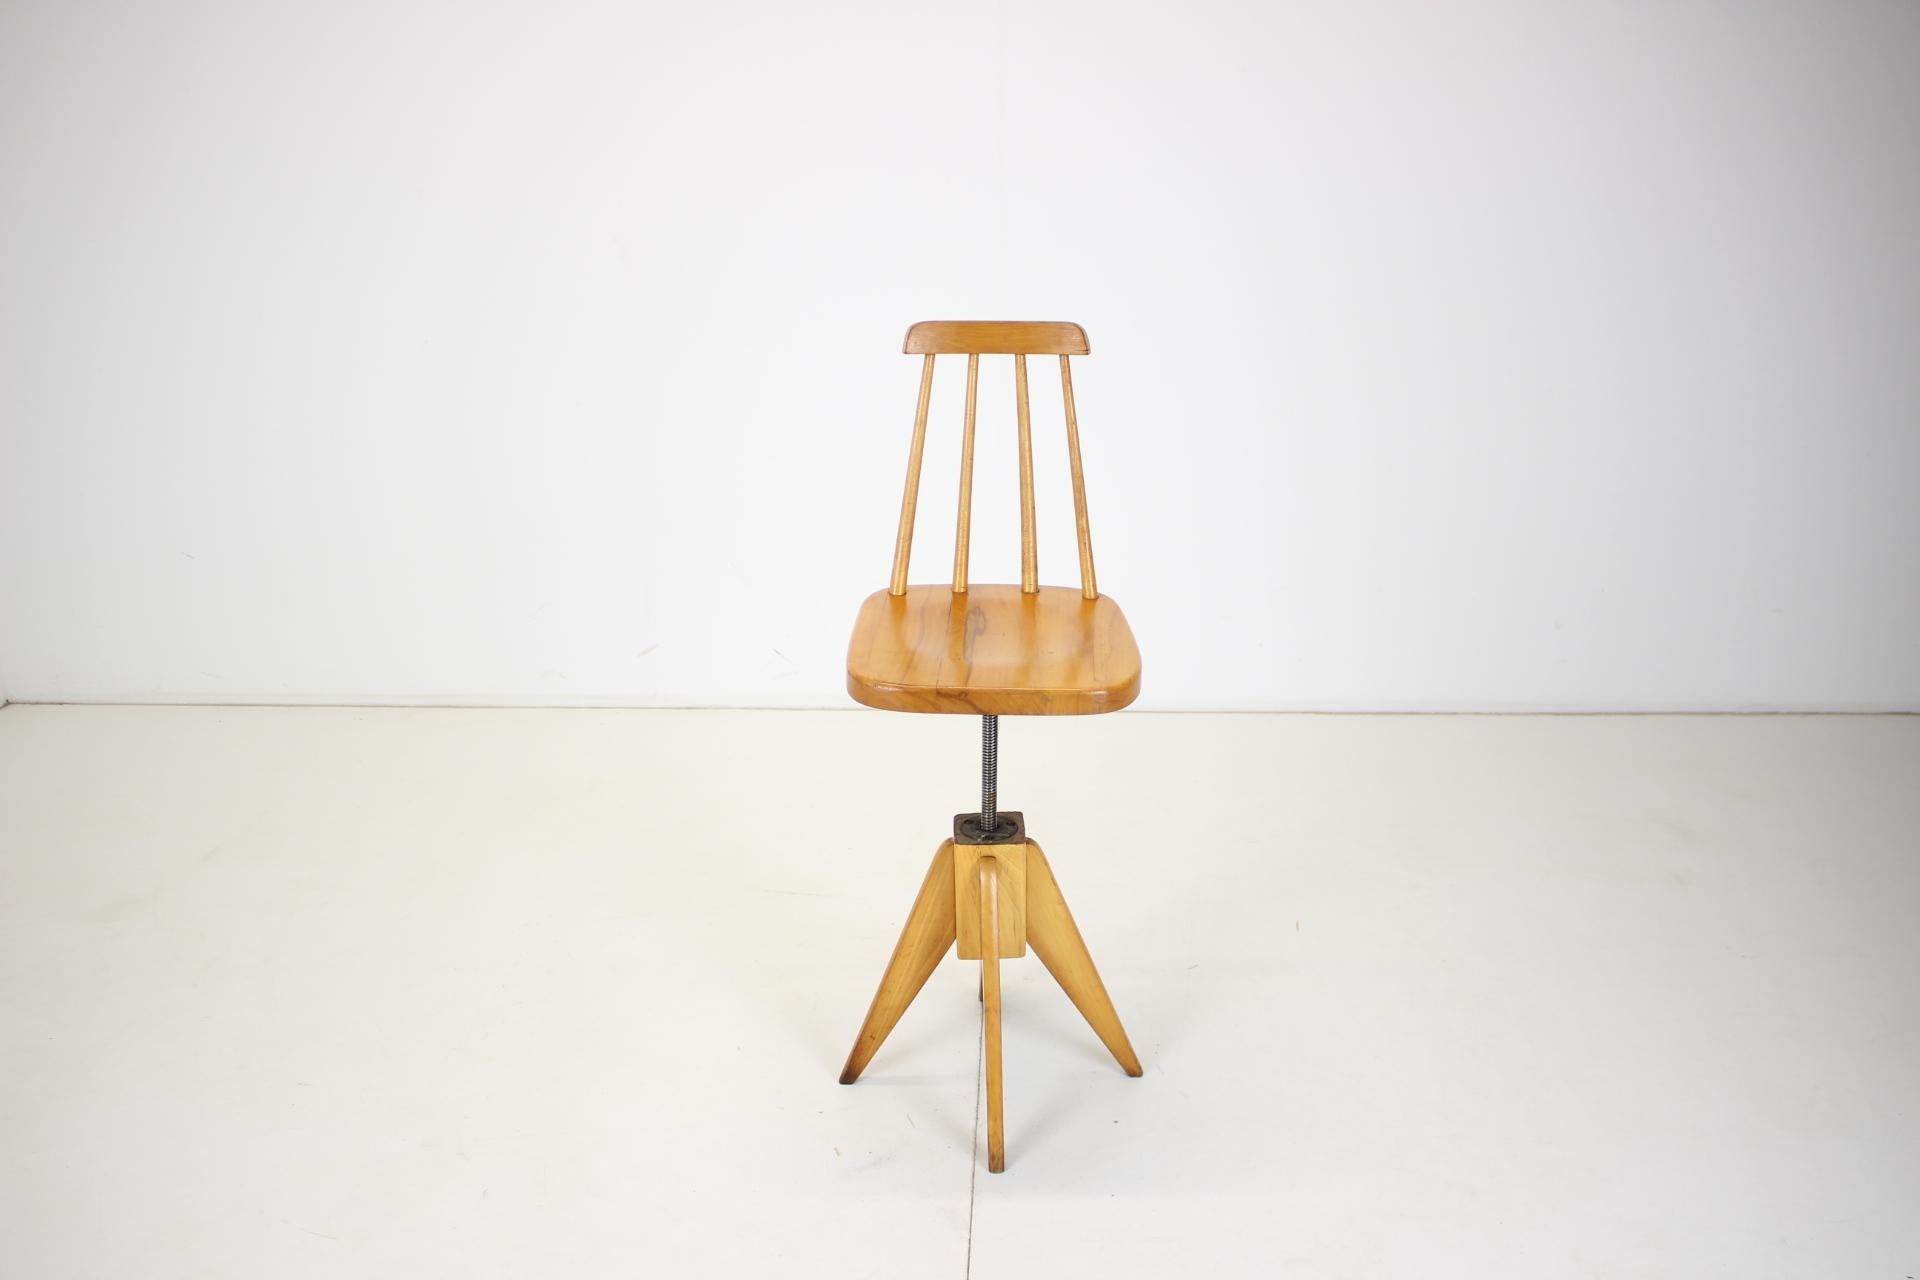 Midcentury Wood Revolving Chair, Czechoslovakia, 1970s For Sale 3